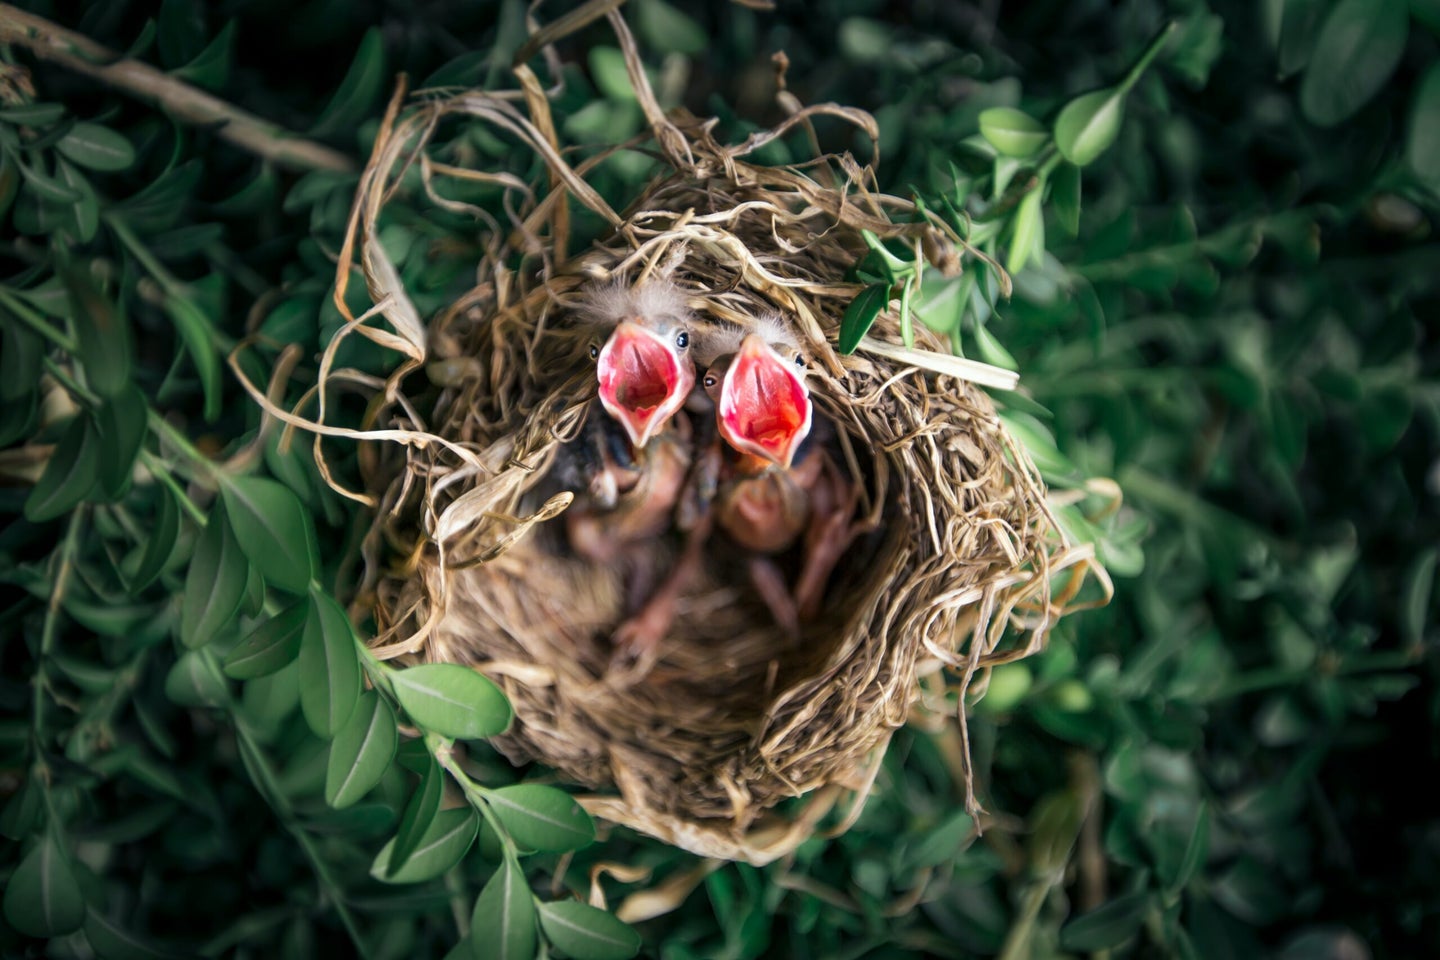 baby birds in a nest